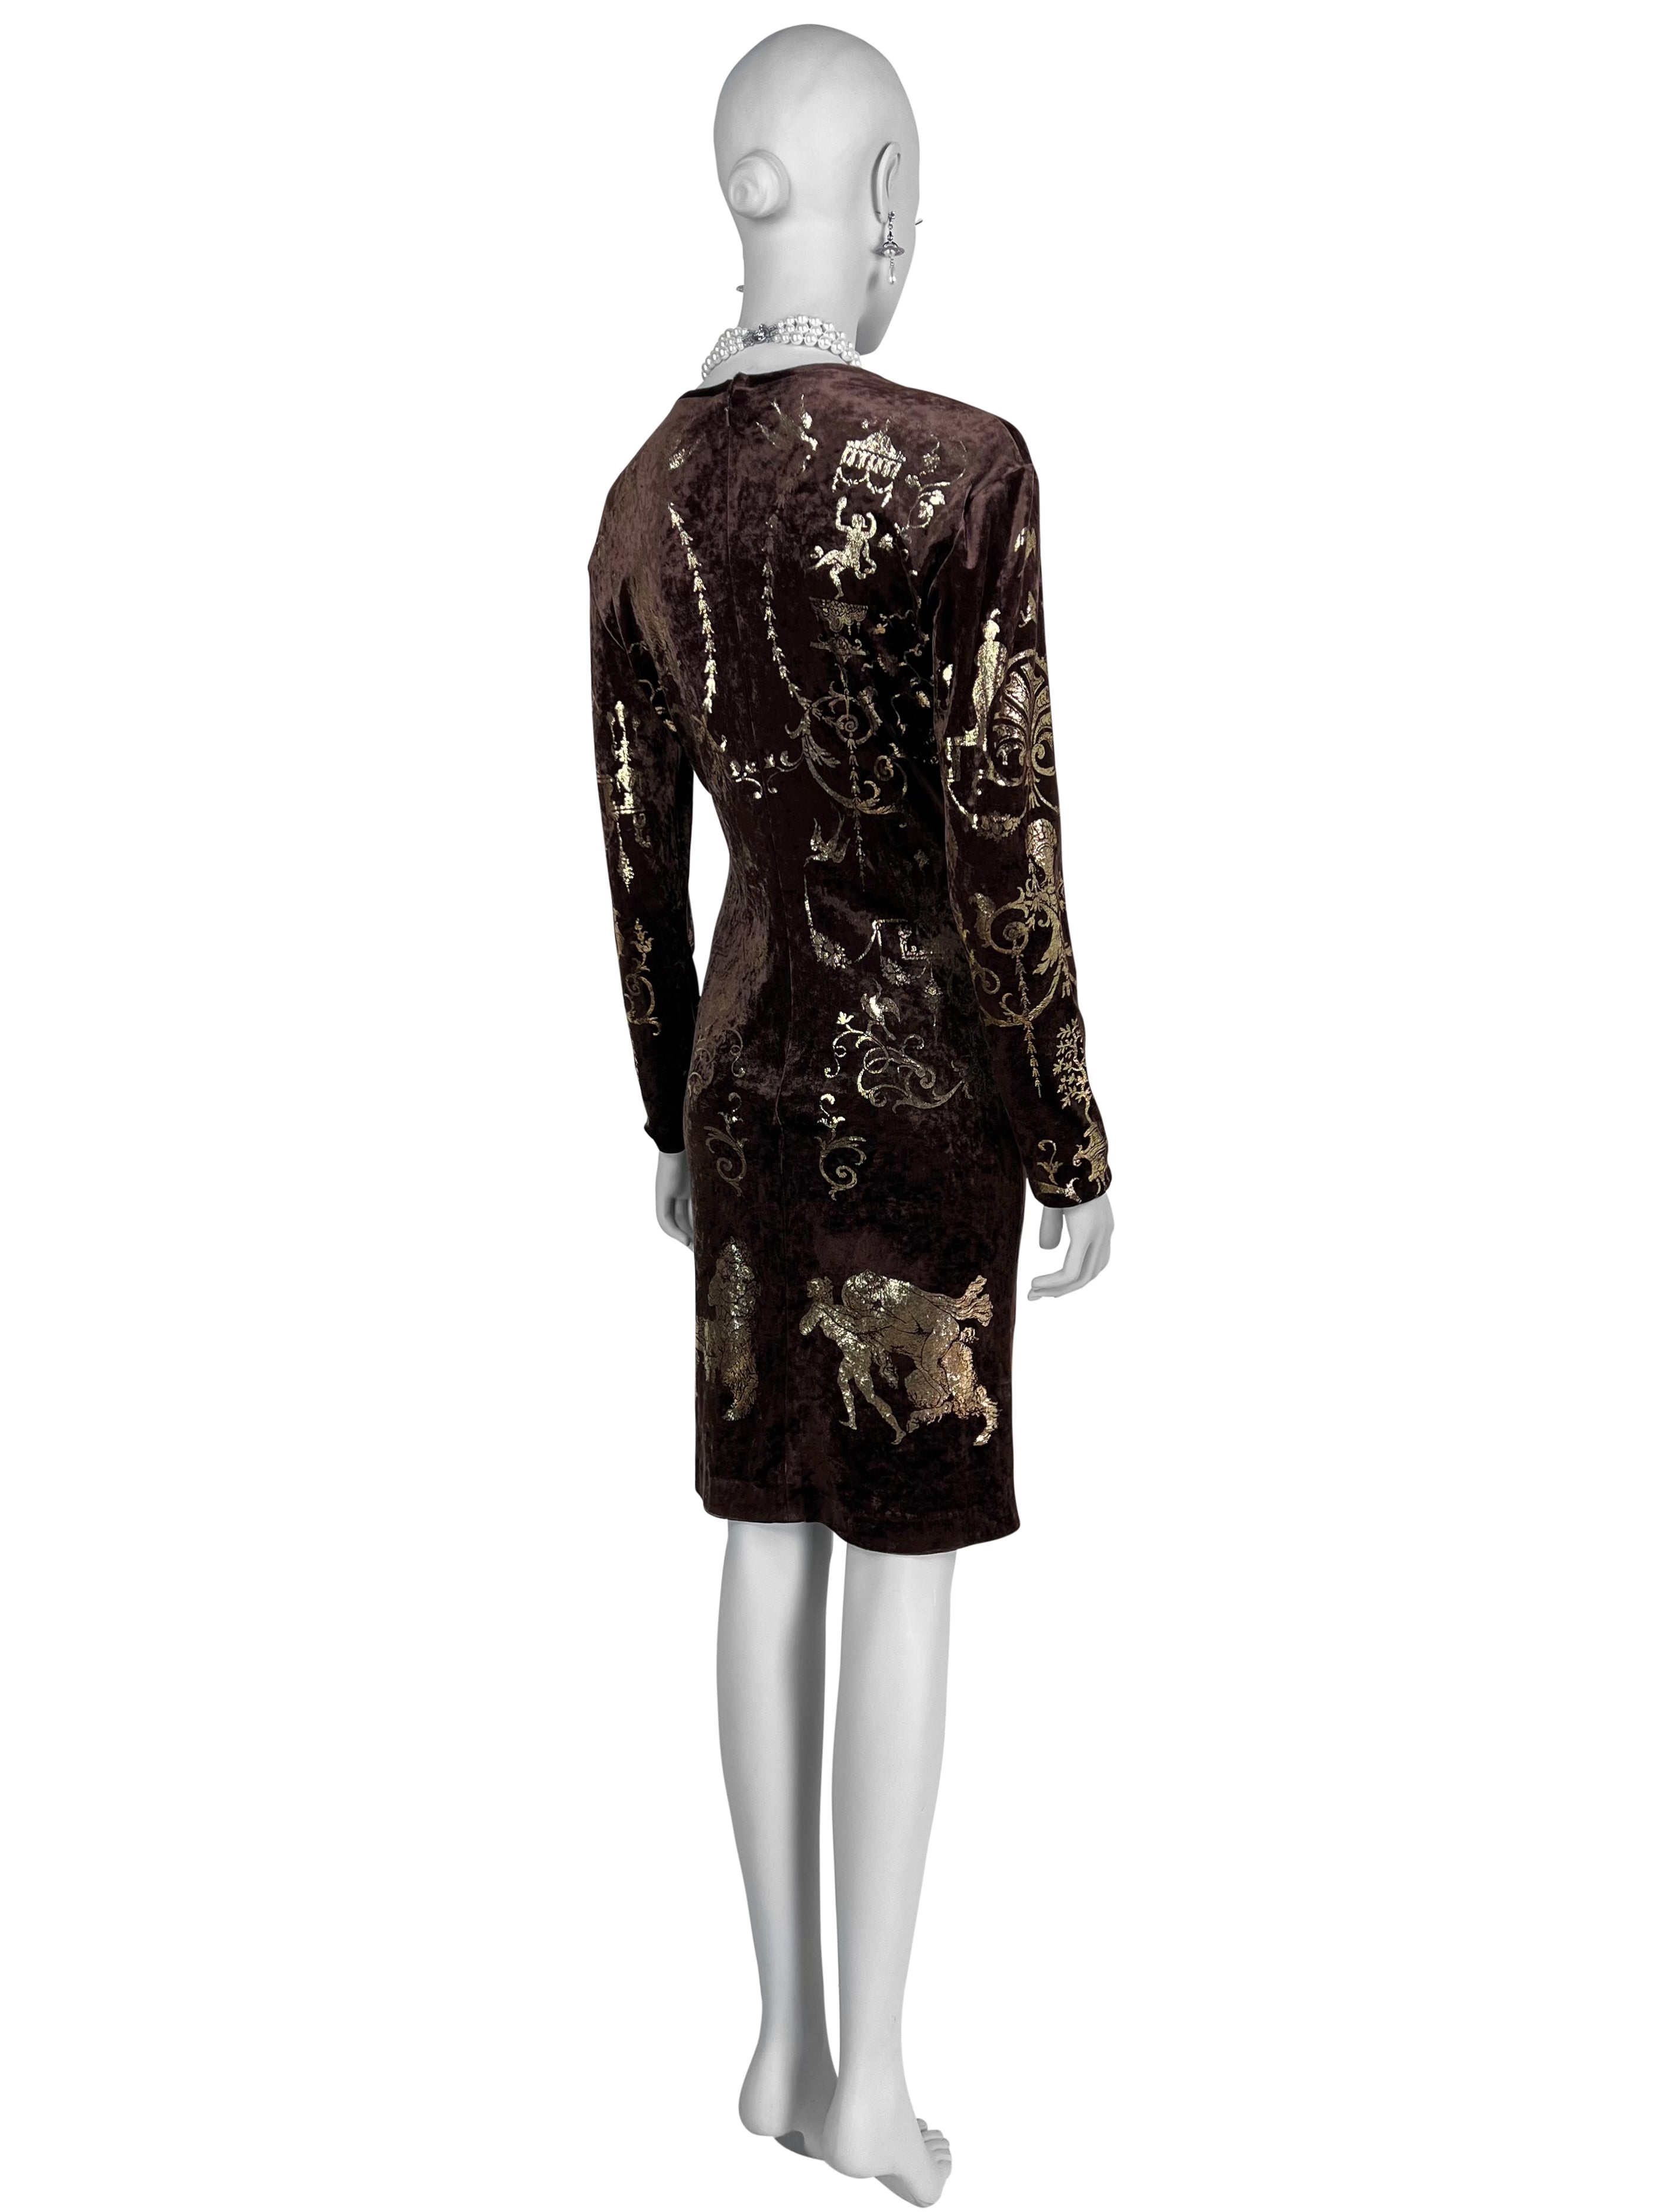 Vivienne Westwood Fall 1990 “Portrait Collection” Foiled “Boulle” Printed Velvet Bodycon Dress